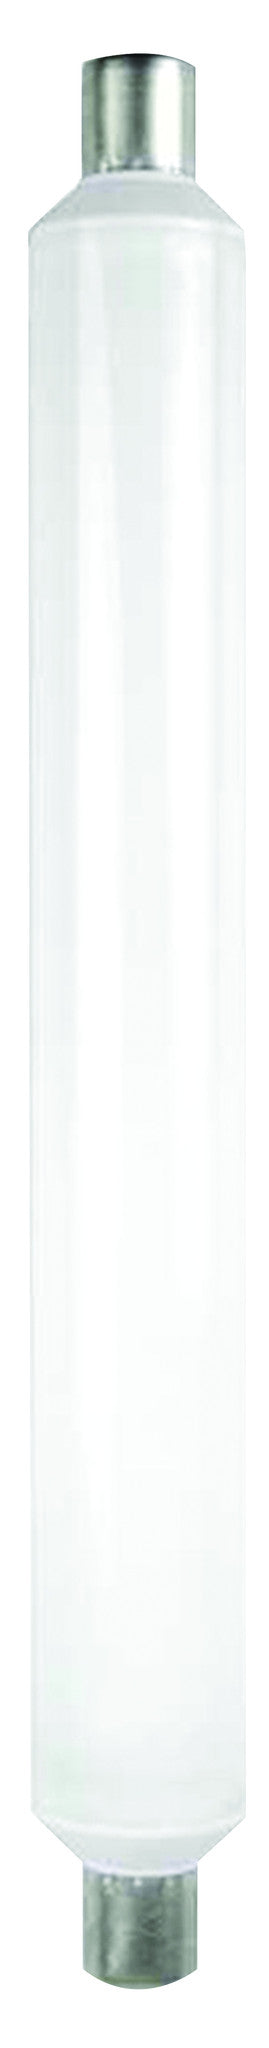 997107 - Tube Linolite LED S19 309mm 9W 2700K 700Lm